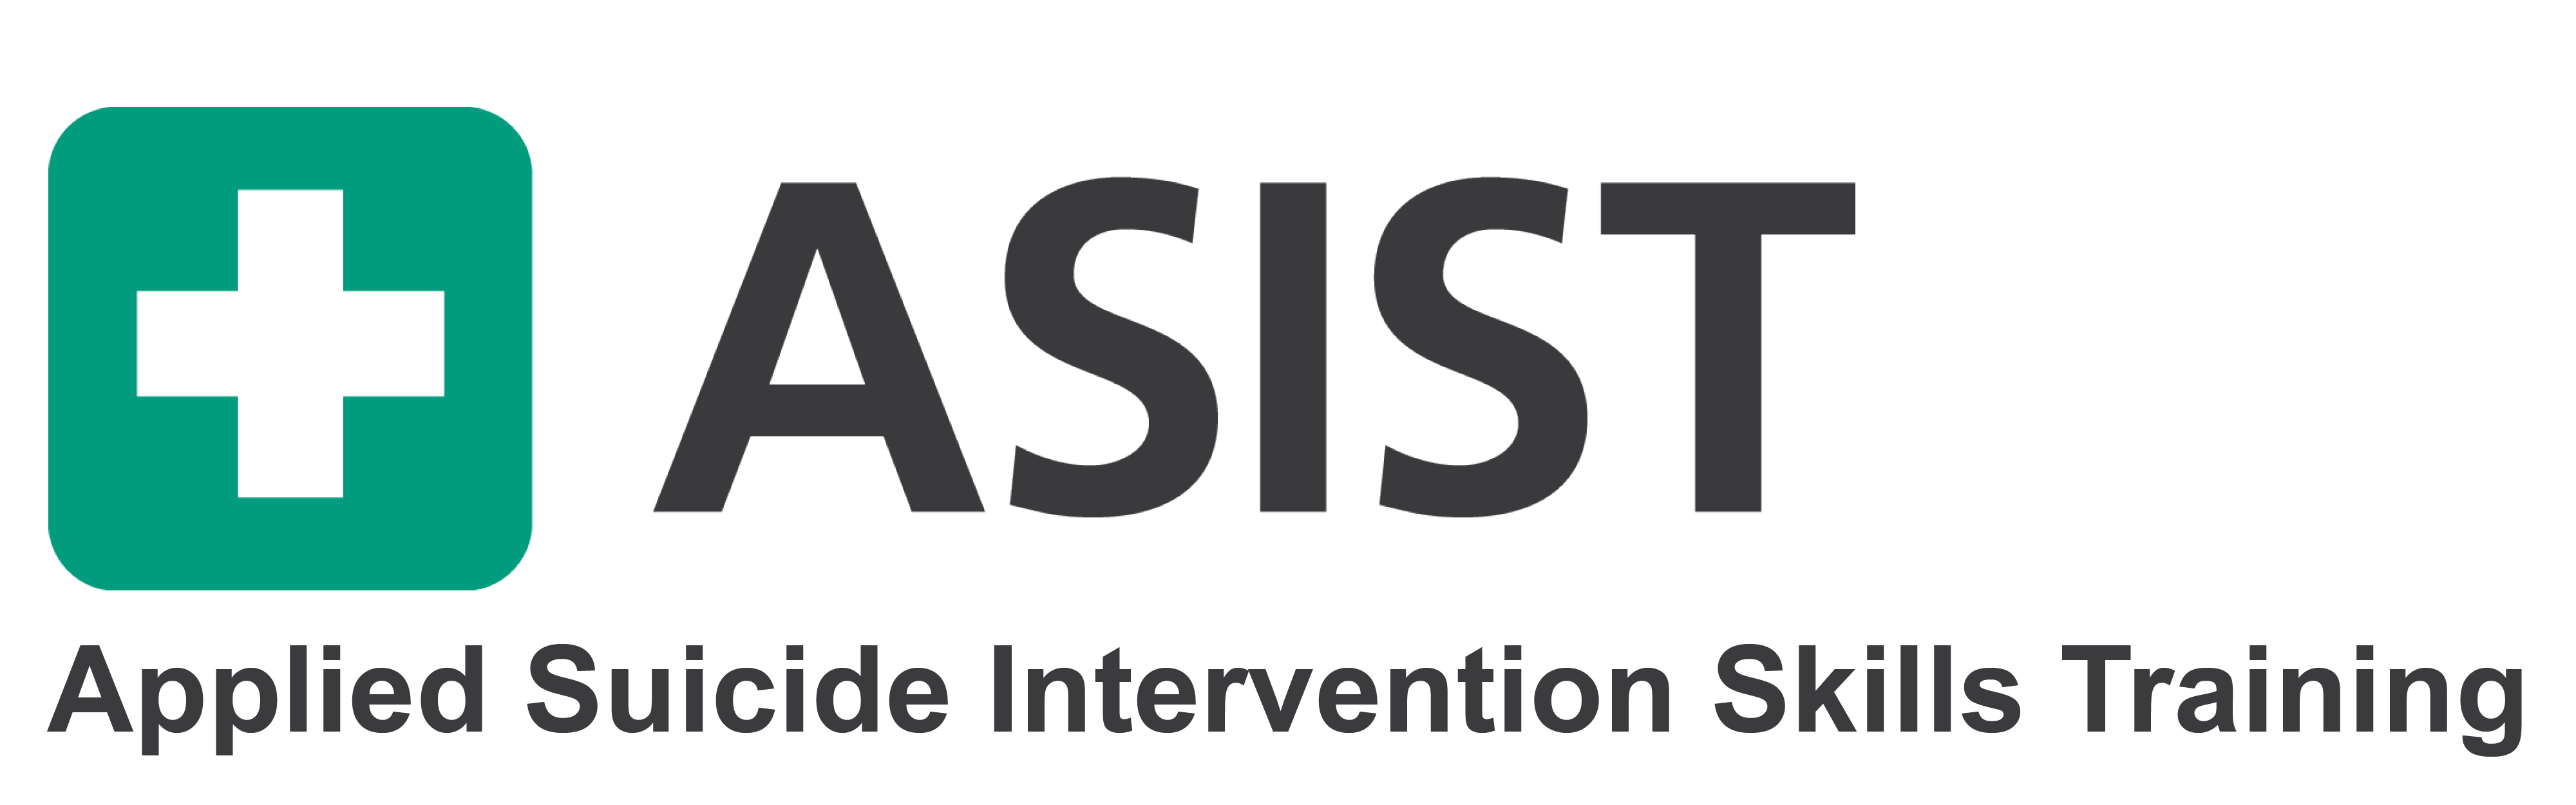 ASIST-Green-Logo